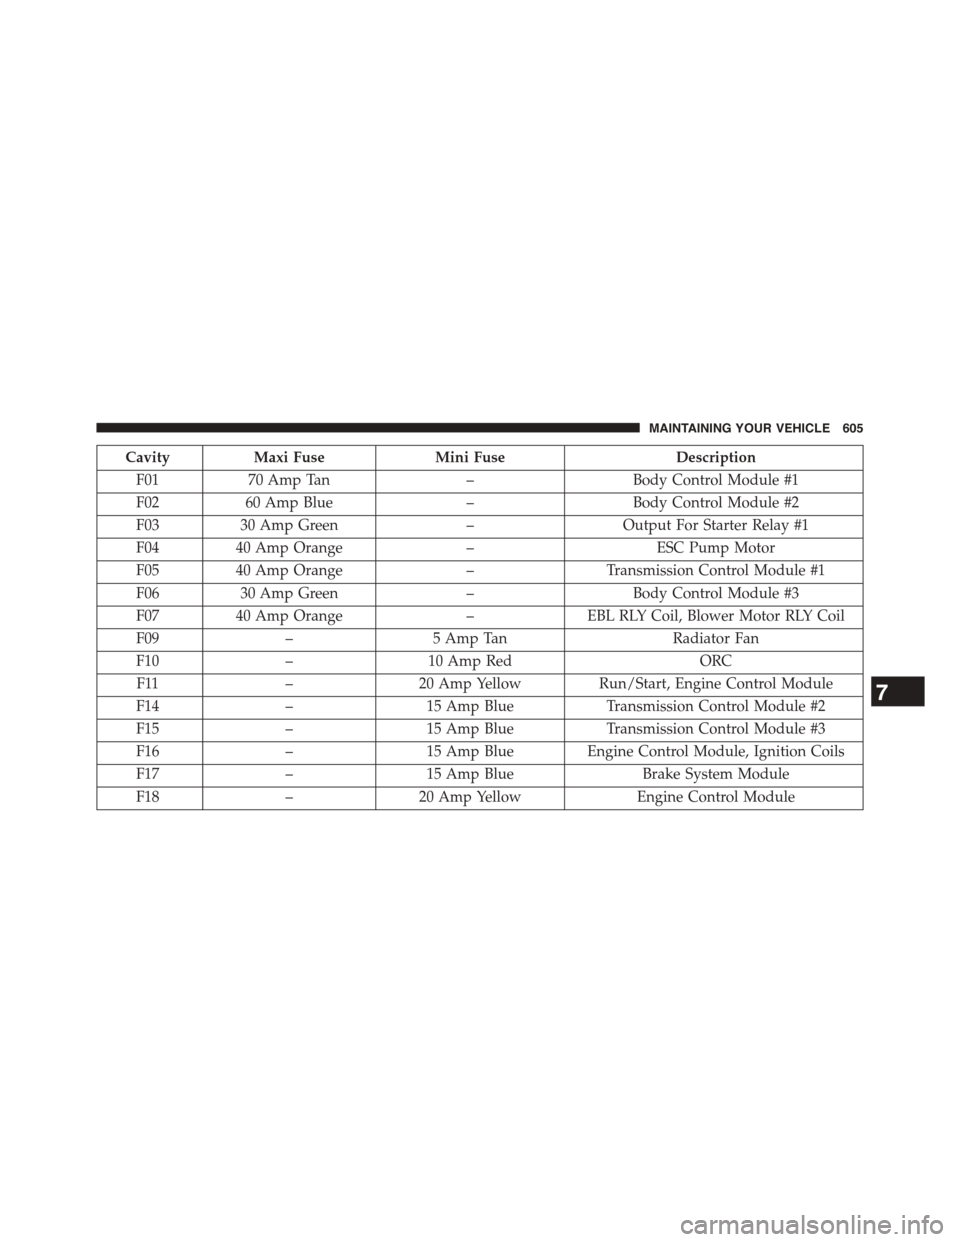 DODGE DART 2015 PF / 1.G Owners Manual CavityMaxi FuseMini FuseDescription
F0170 Amp Tan–Body Control Module #1
F0260 Amp Blue–Body Control Module #2
F0330 Amp Green–Output For Starter Relay #1
F0440 Amp Orange–ESC Pump Motor
F0540